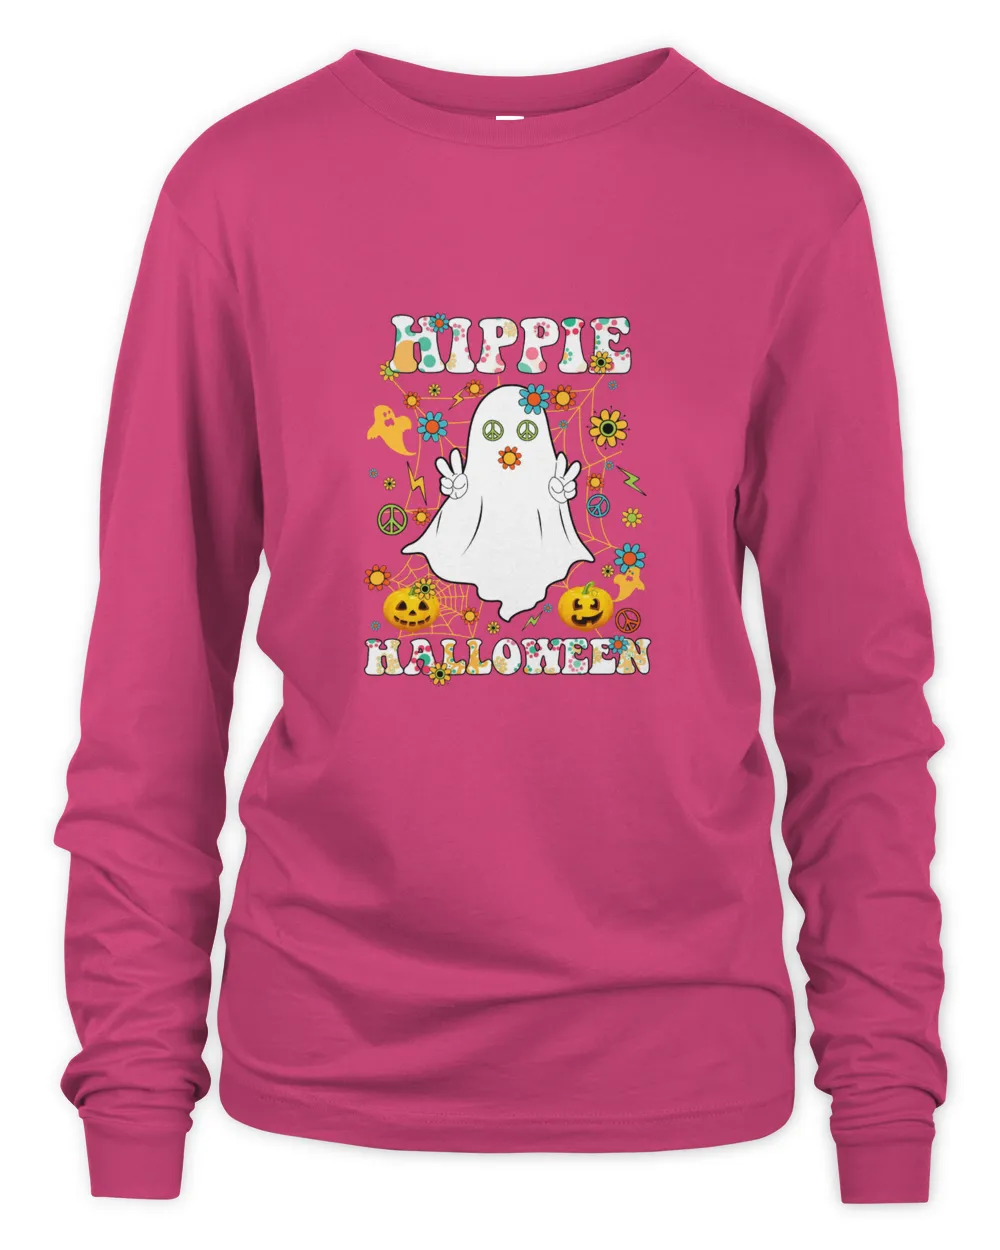 Hipple Halloween Women's Long Sleeved T-Shirt, brilliant flowers cute ghost pumpkin funny